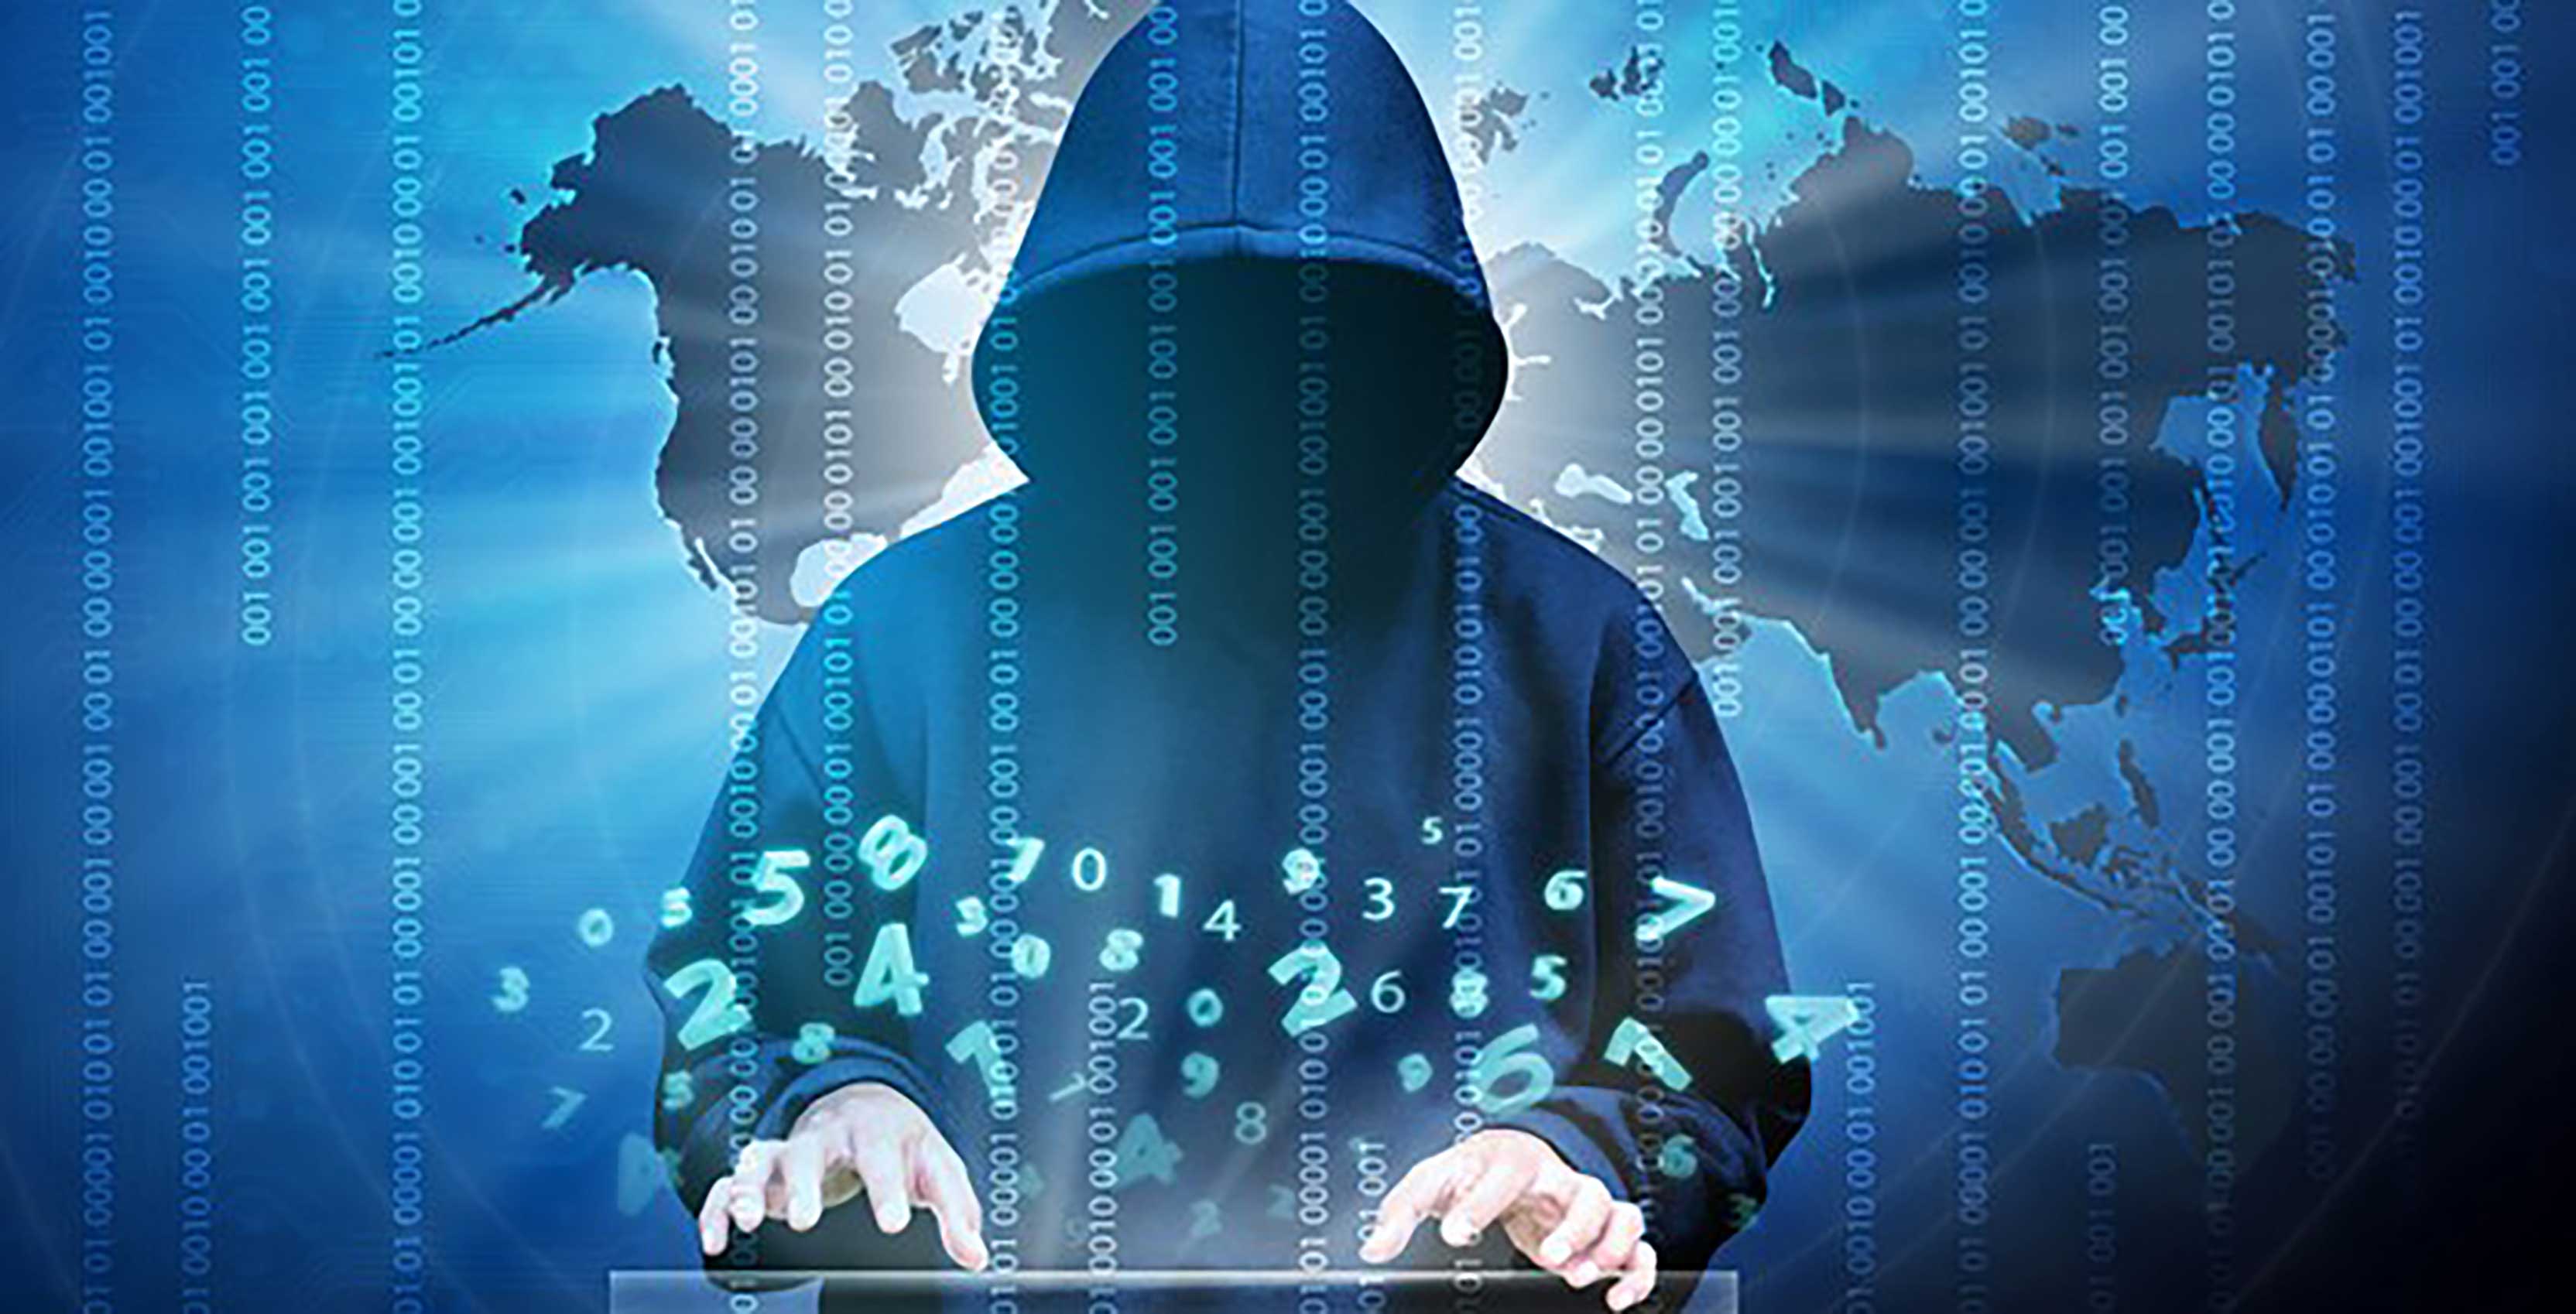 Man in hood cybercrime